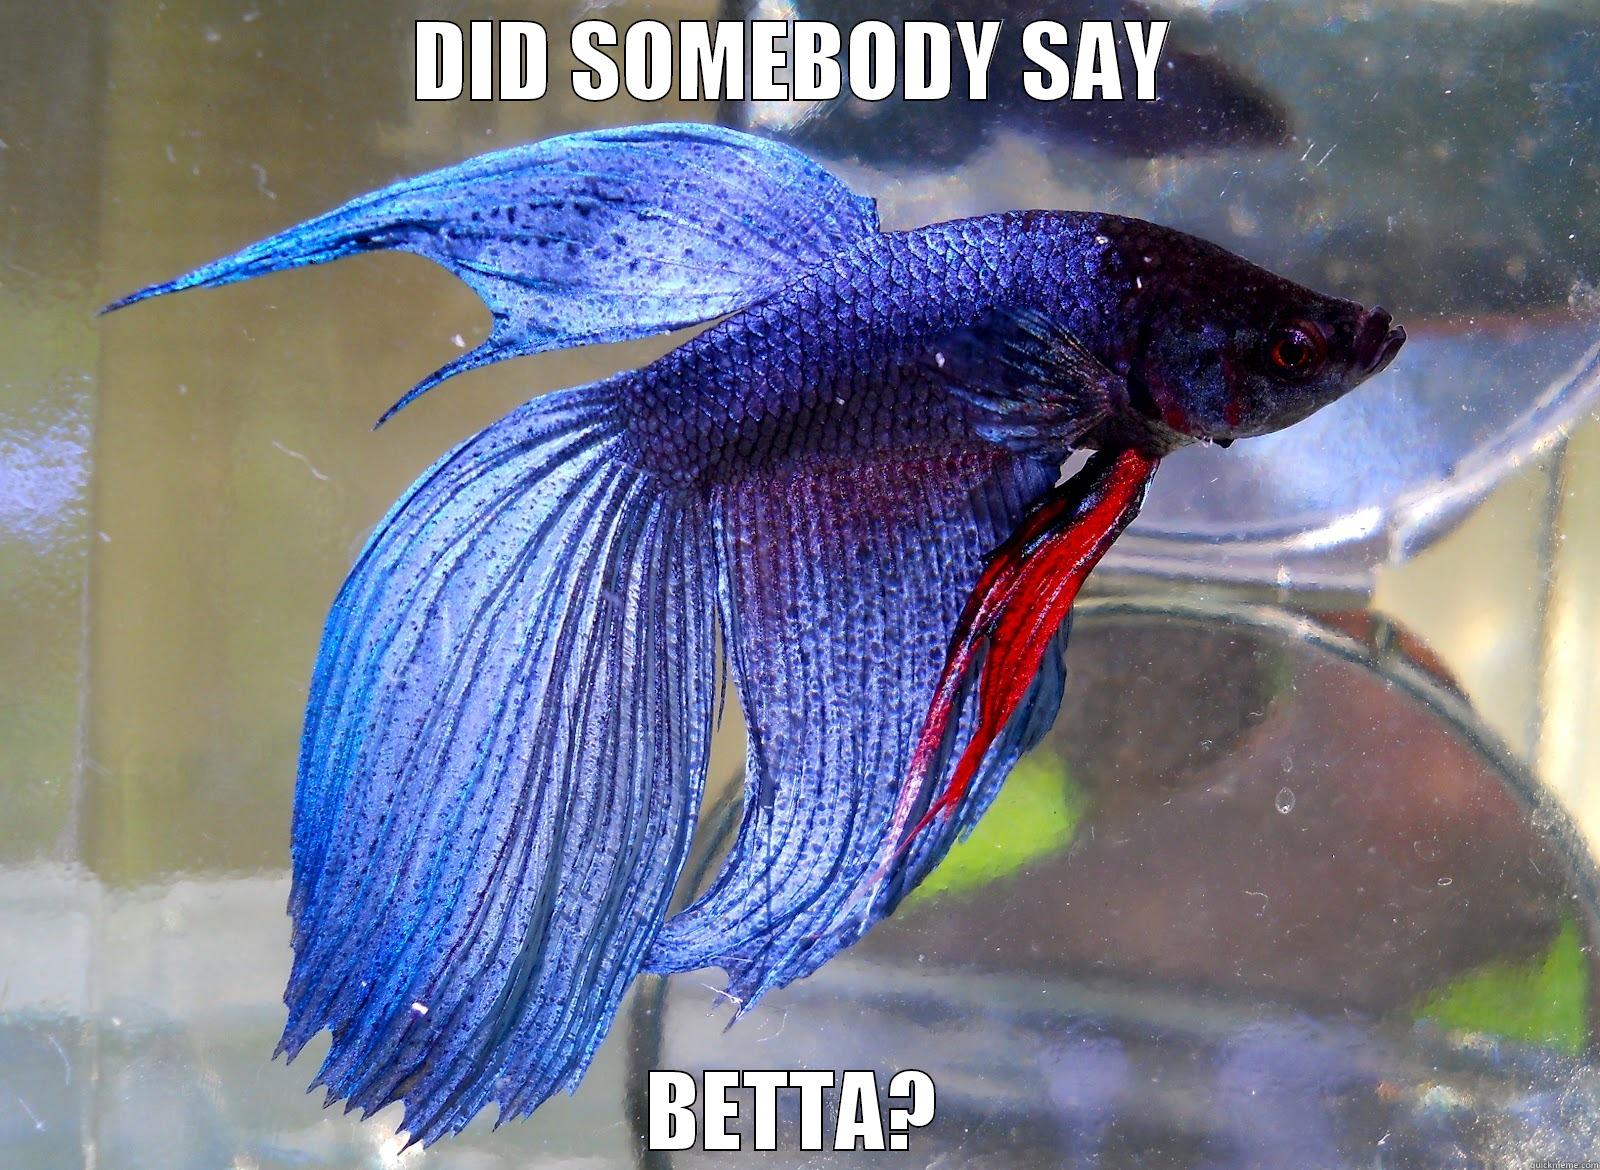 Optimistic Bettafish - DID SOMEBODY SAY BETTA? Misc